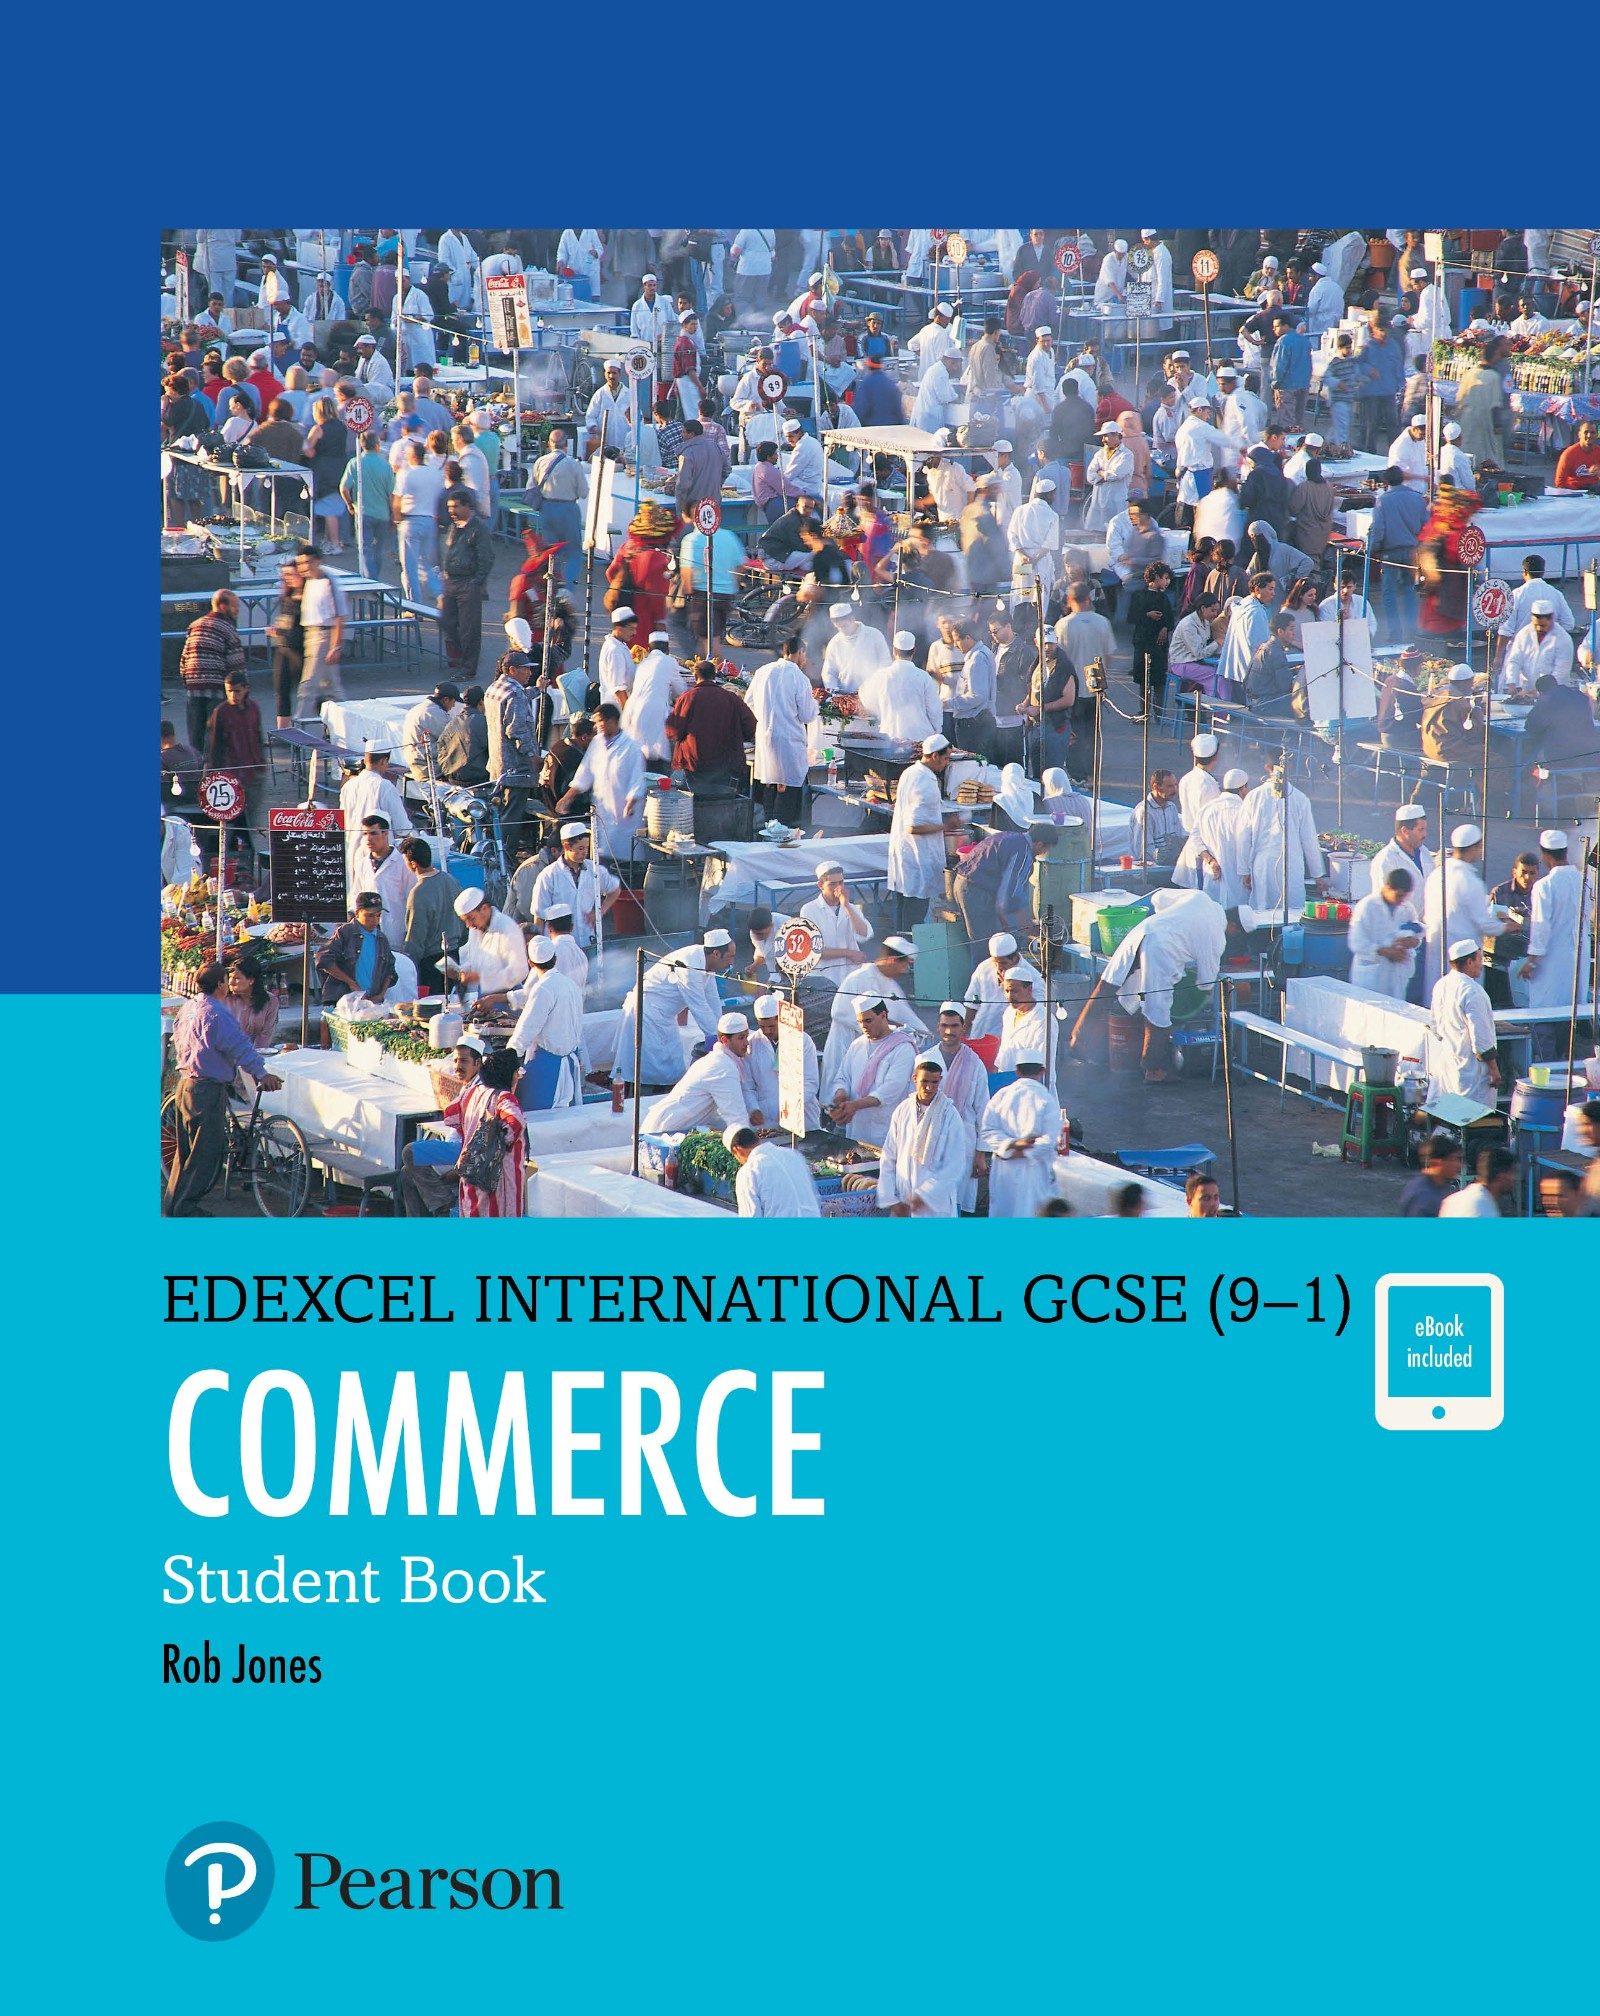 International GCSE Commerce book